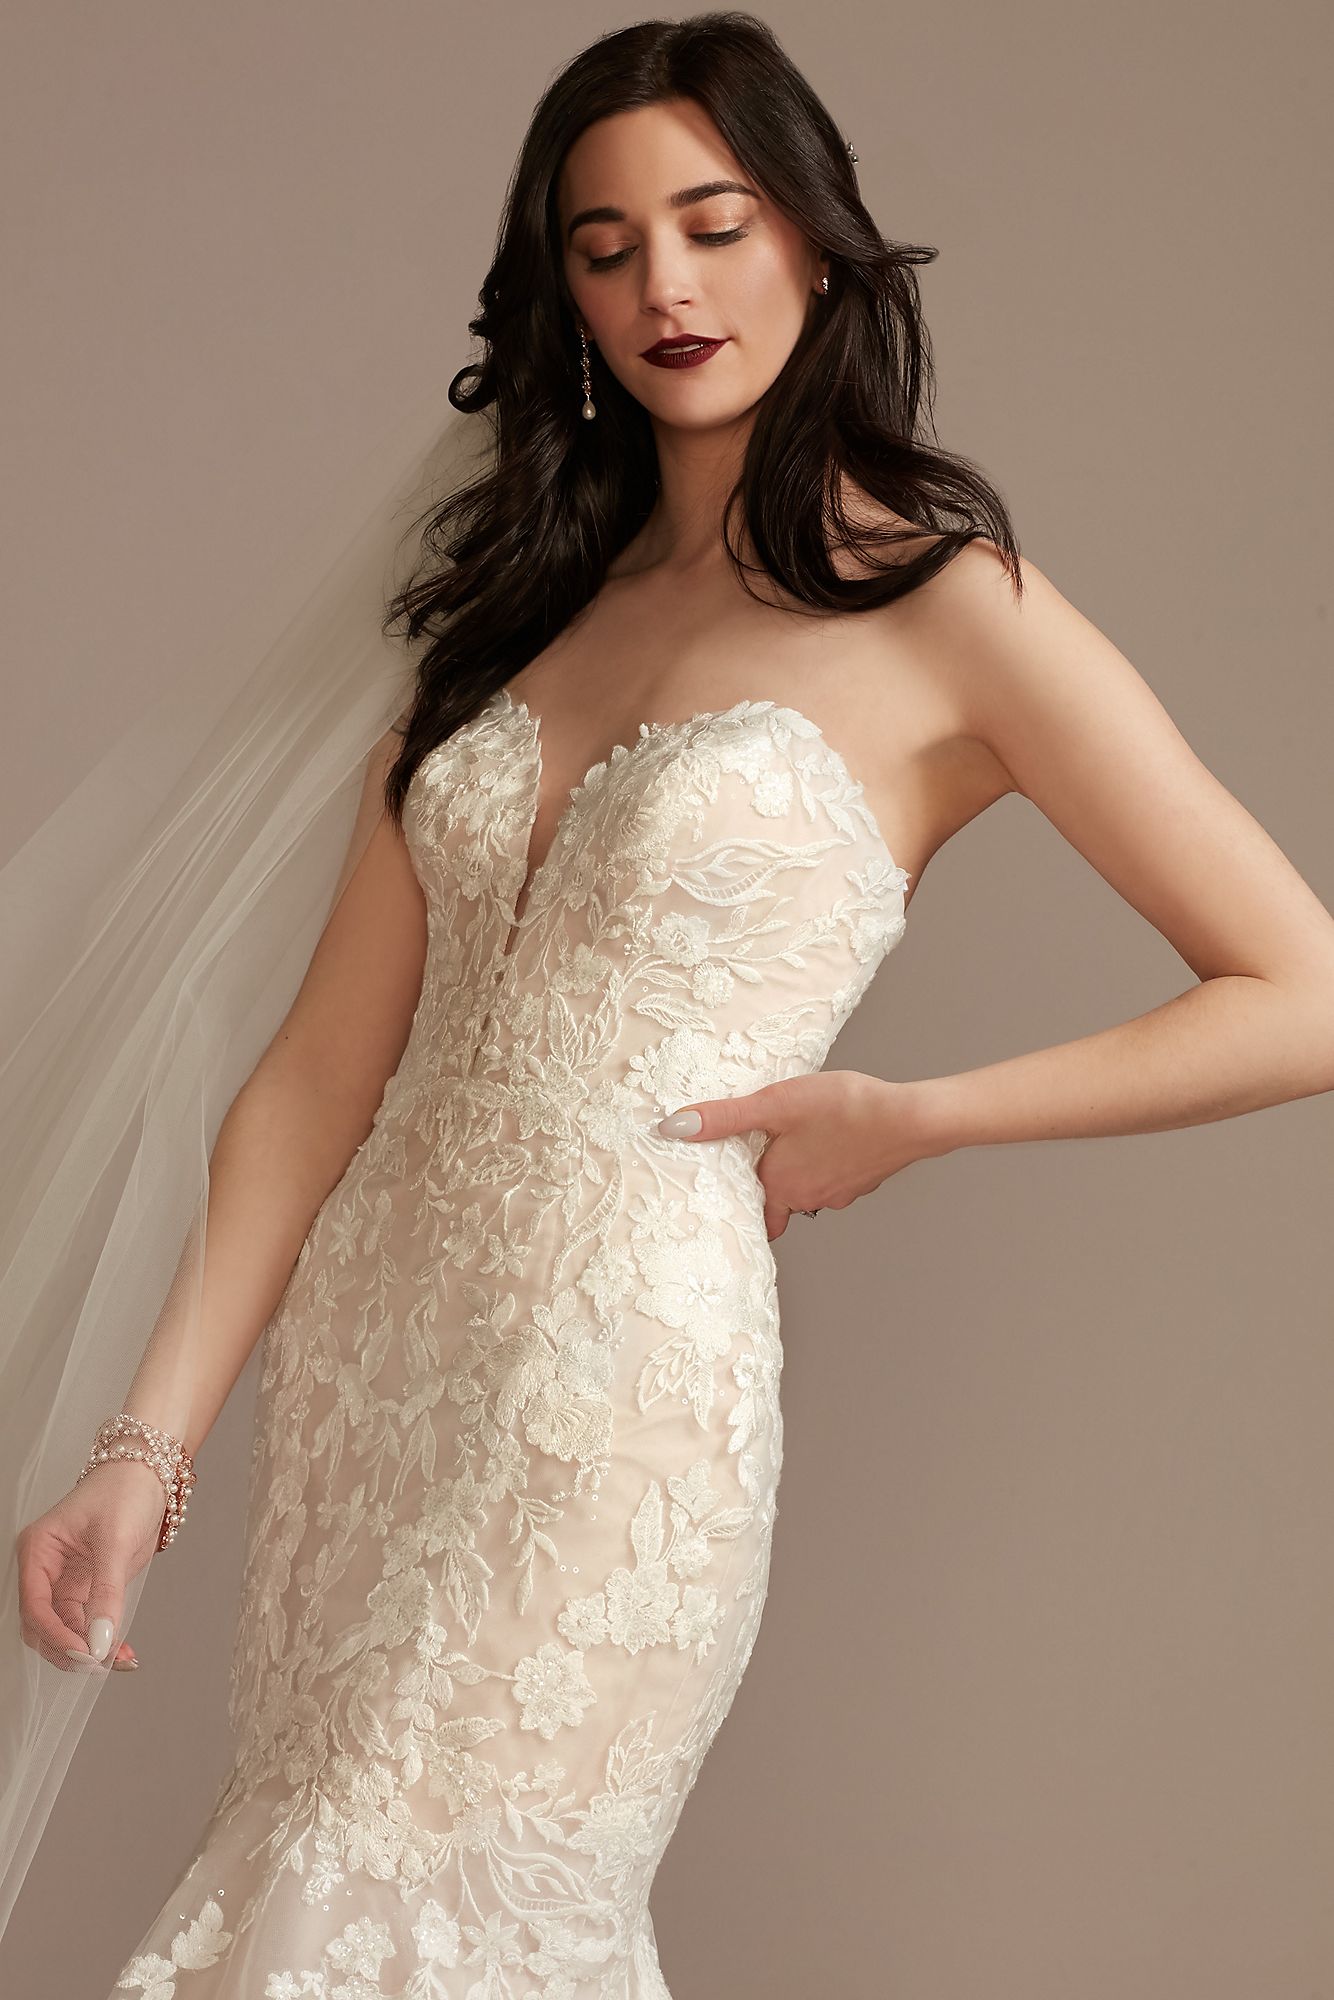 Lace Applique Mermaid Strapless Tall Wedding Dress Oleg Cassini 4XLCWG912